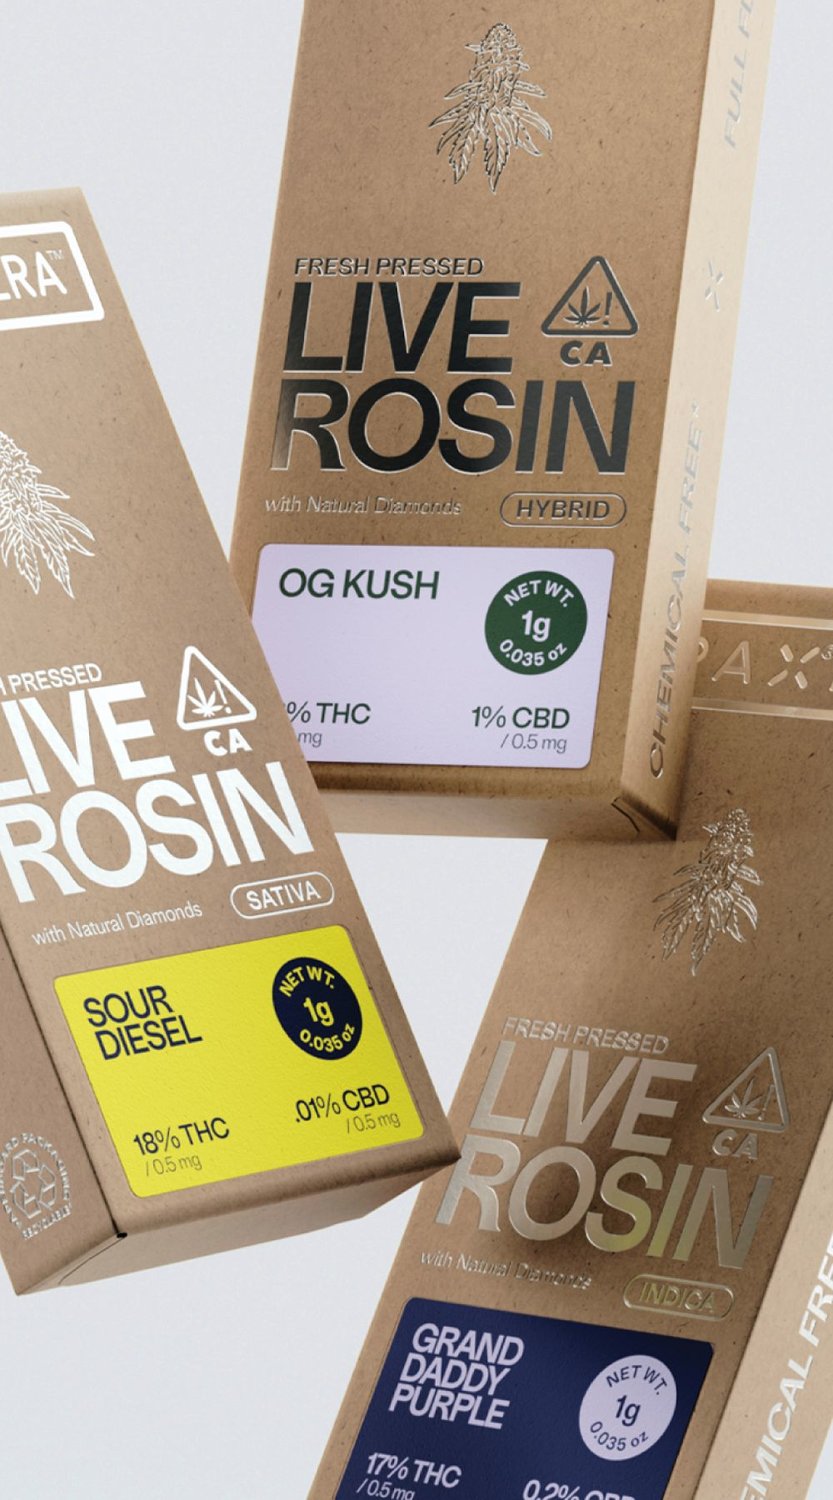 Pax fresh pressed live rosin packaging